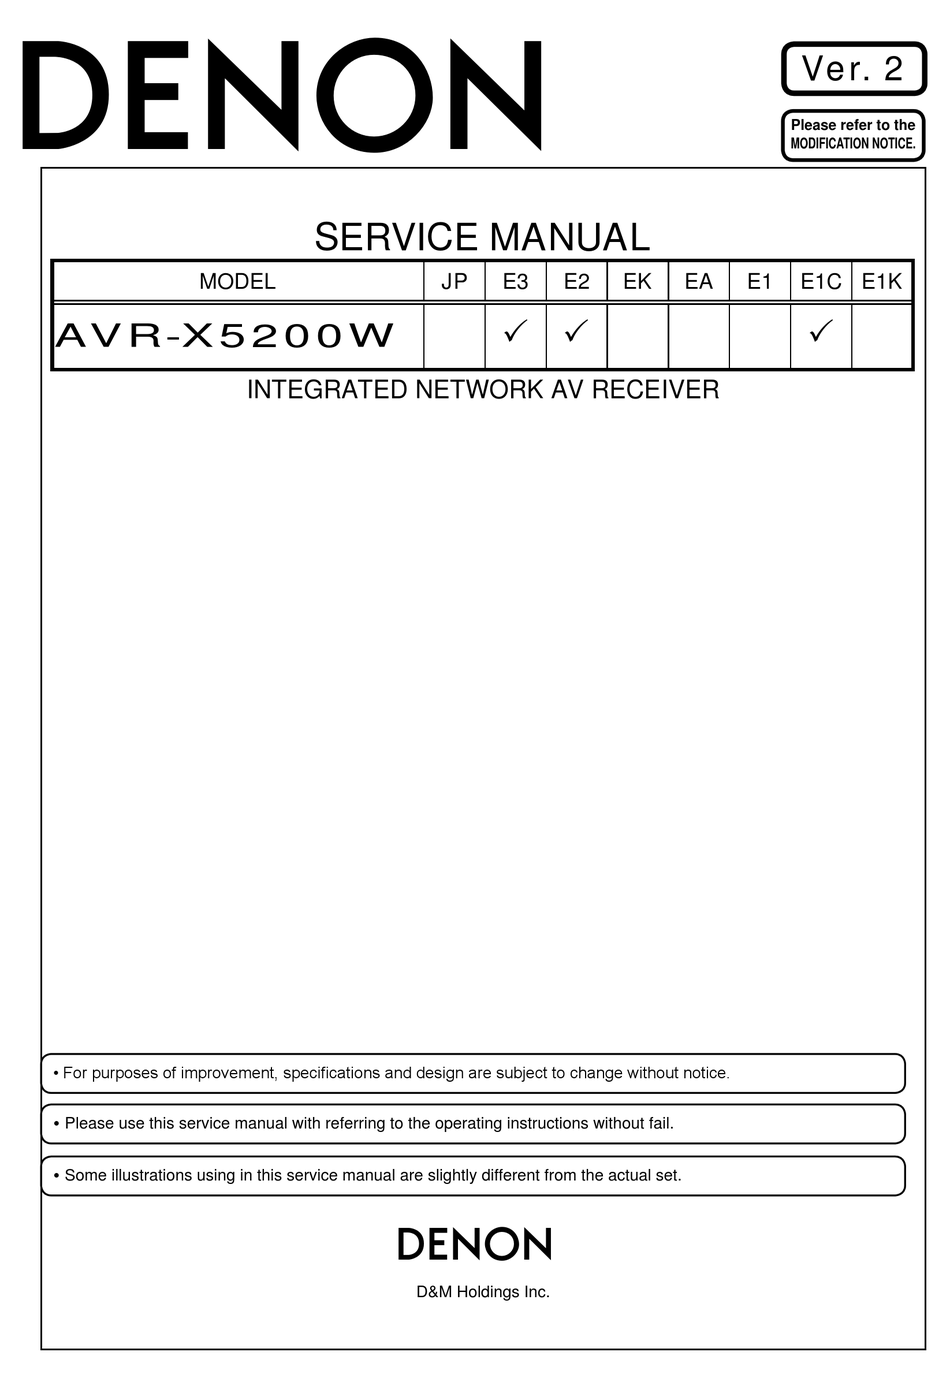 DENON AVR-X5200W SERVICE MANUAL Pdf Download | ManualsLib